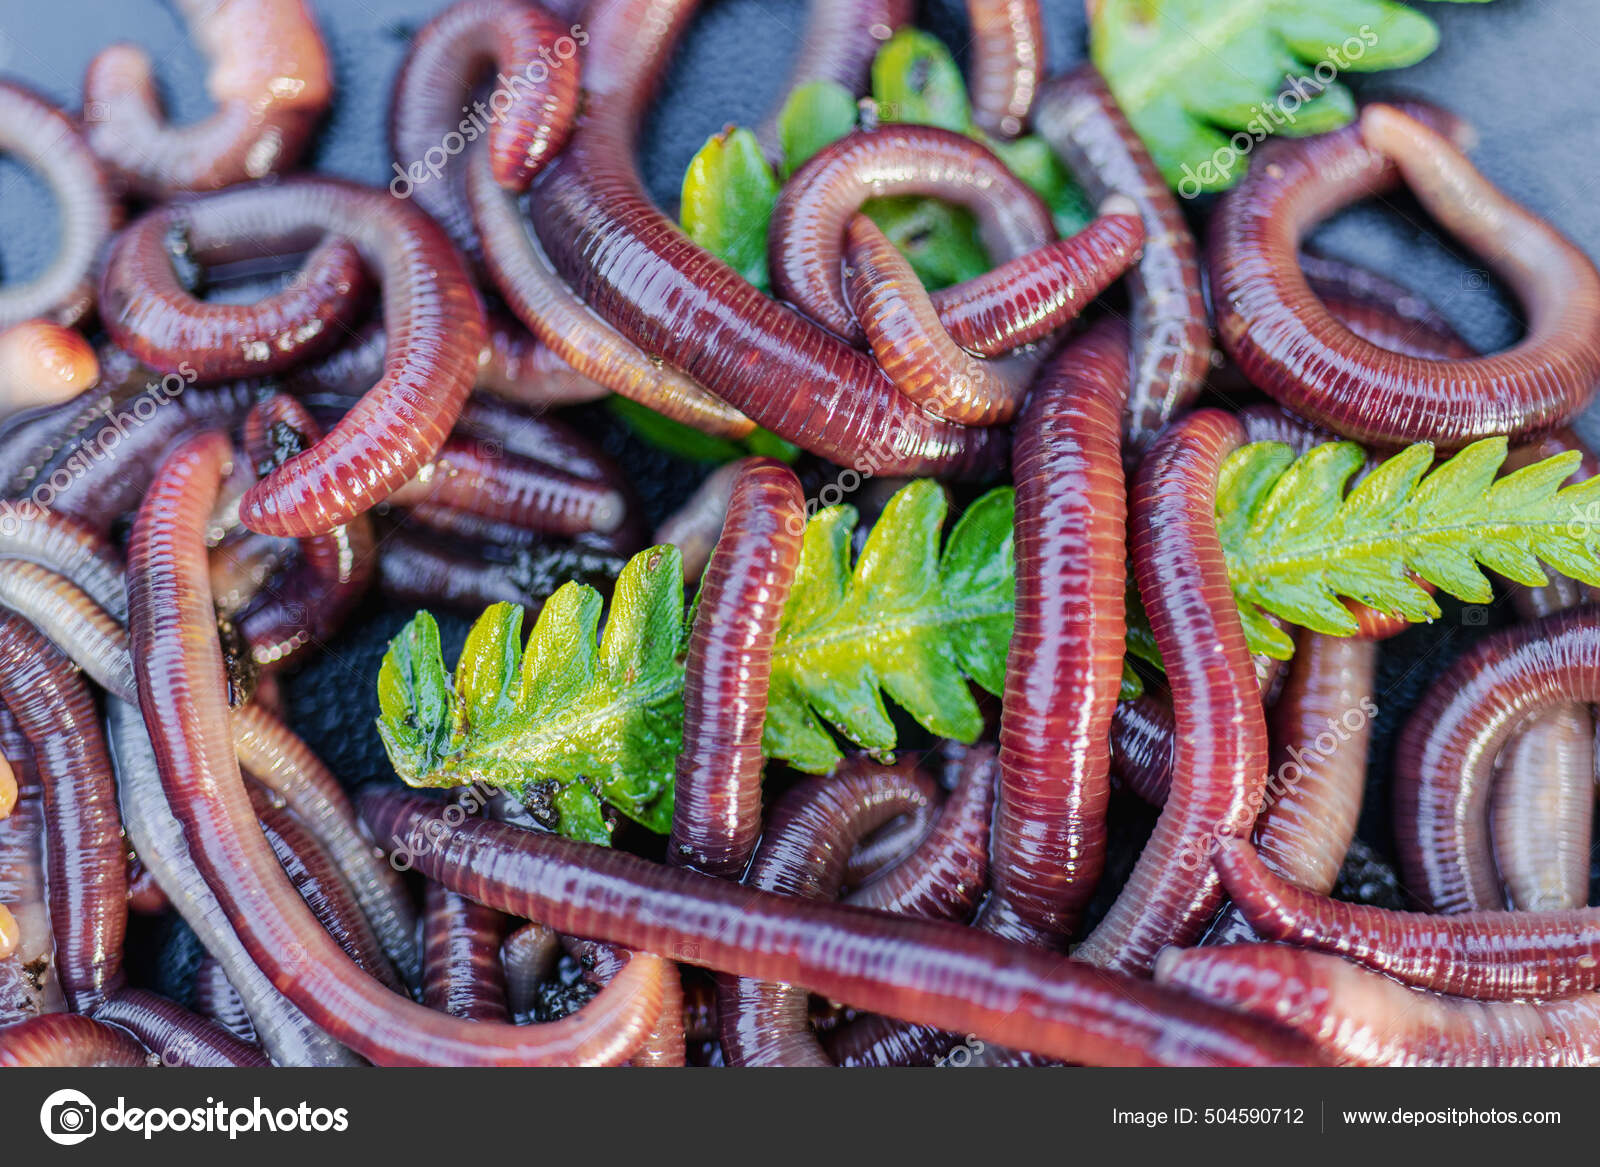 Breeding Red Worms Dendrobena Fertile Soil Natural Soil Improvement Fishing  — Stock Photo © Anoo77 #504590712